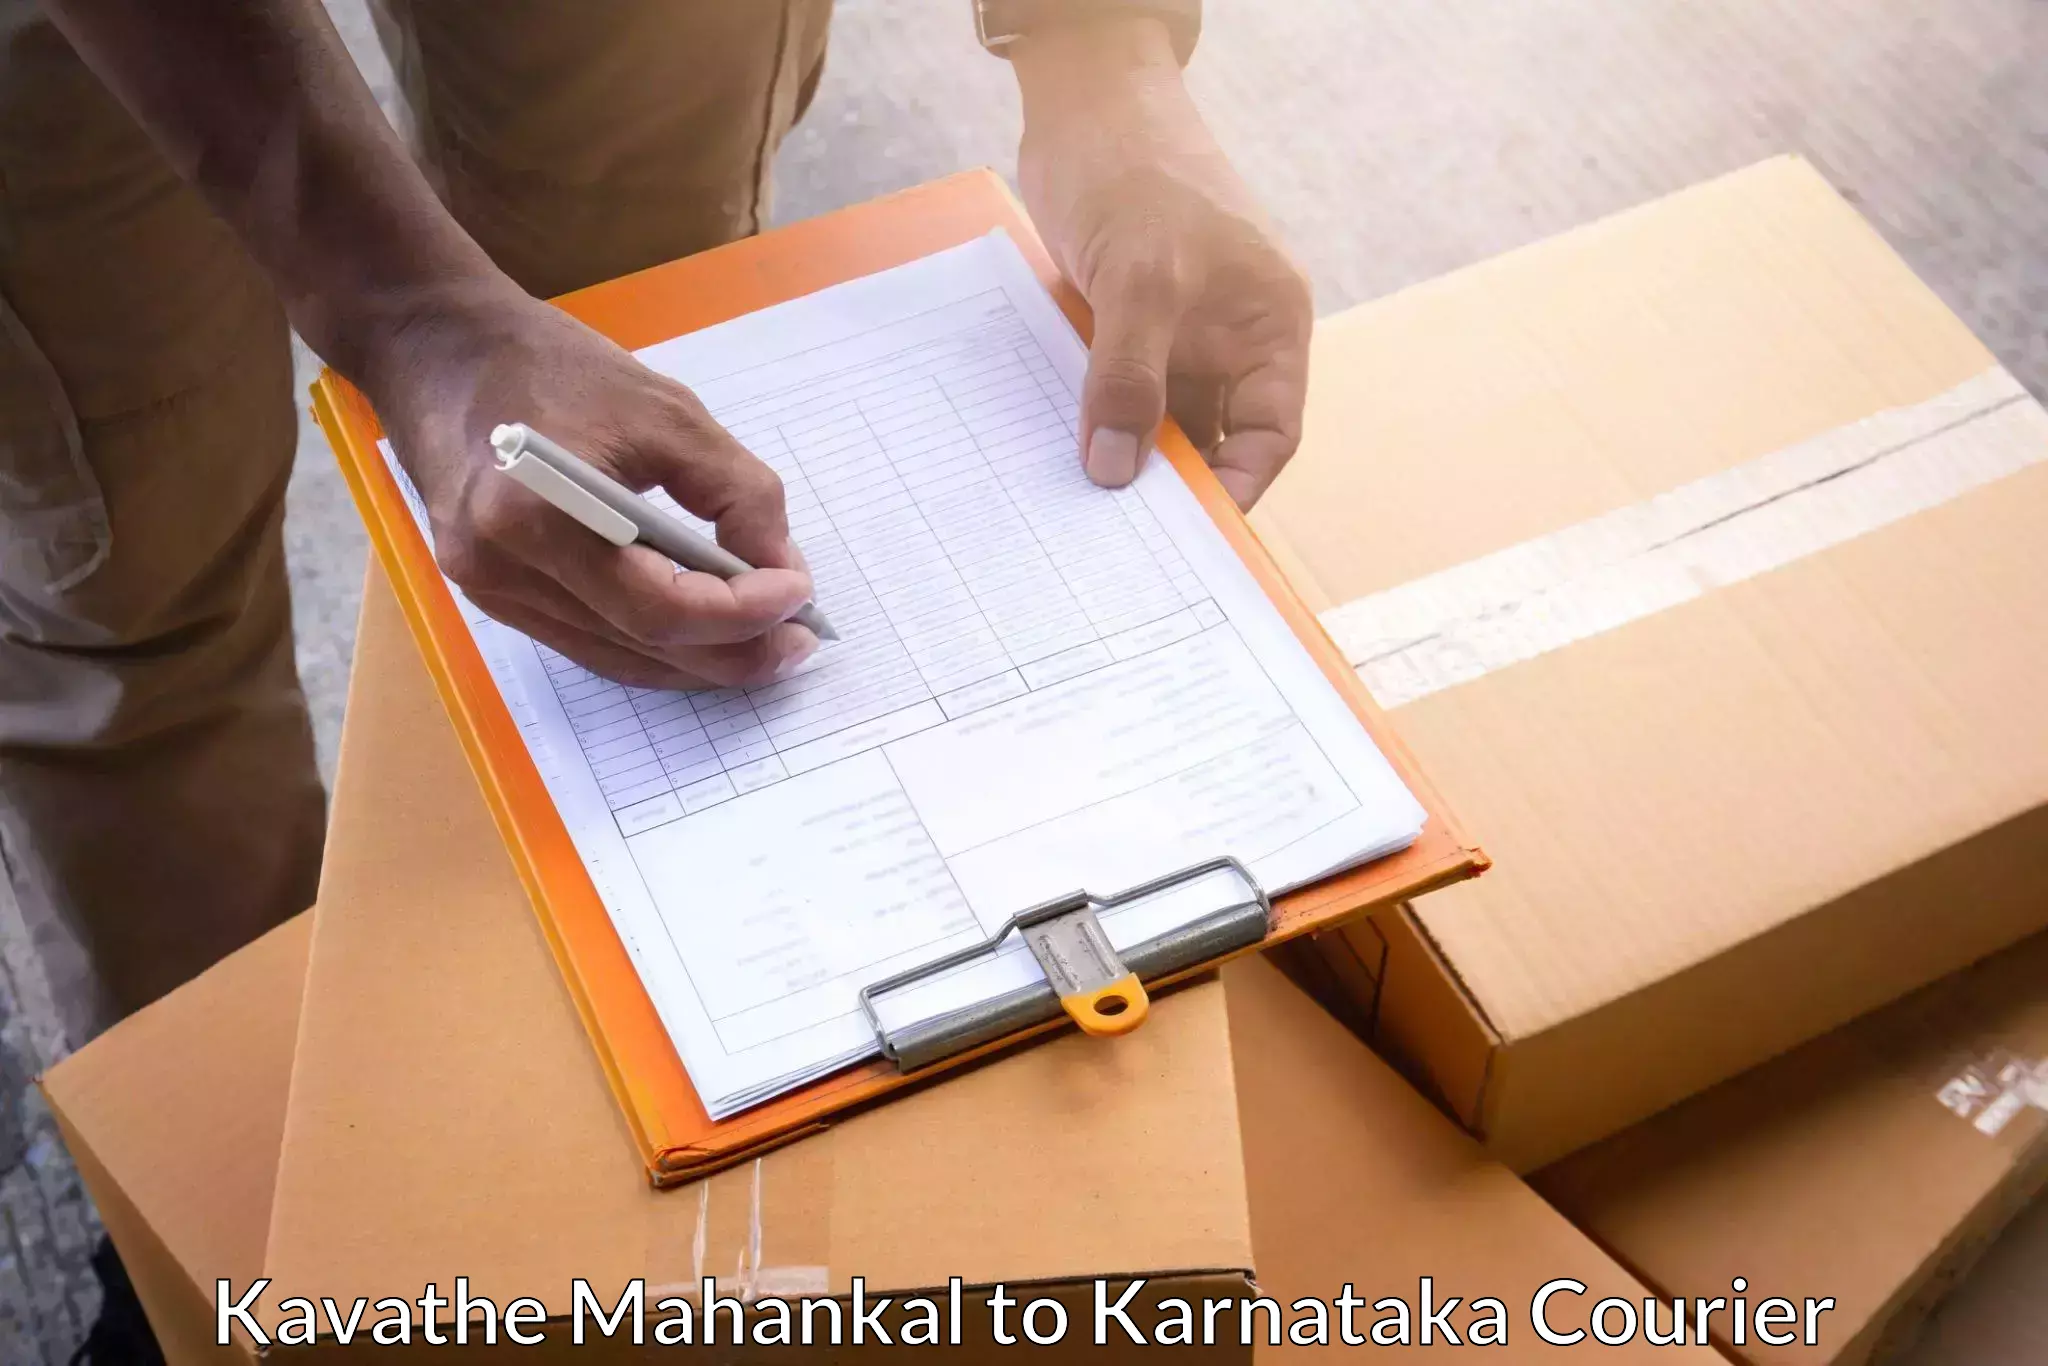 Multi-service courier options Kavathe Mahankal to Navalgund